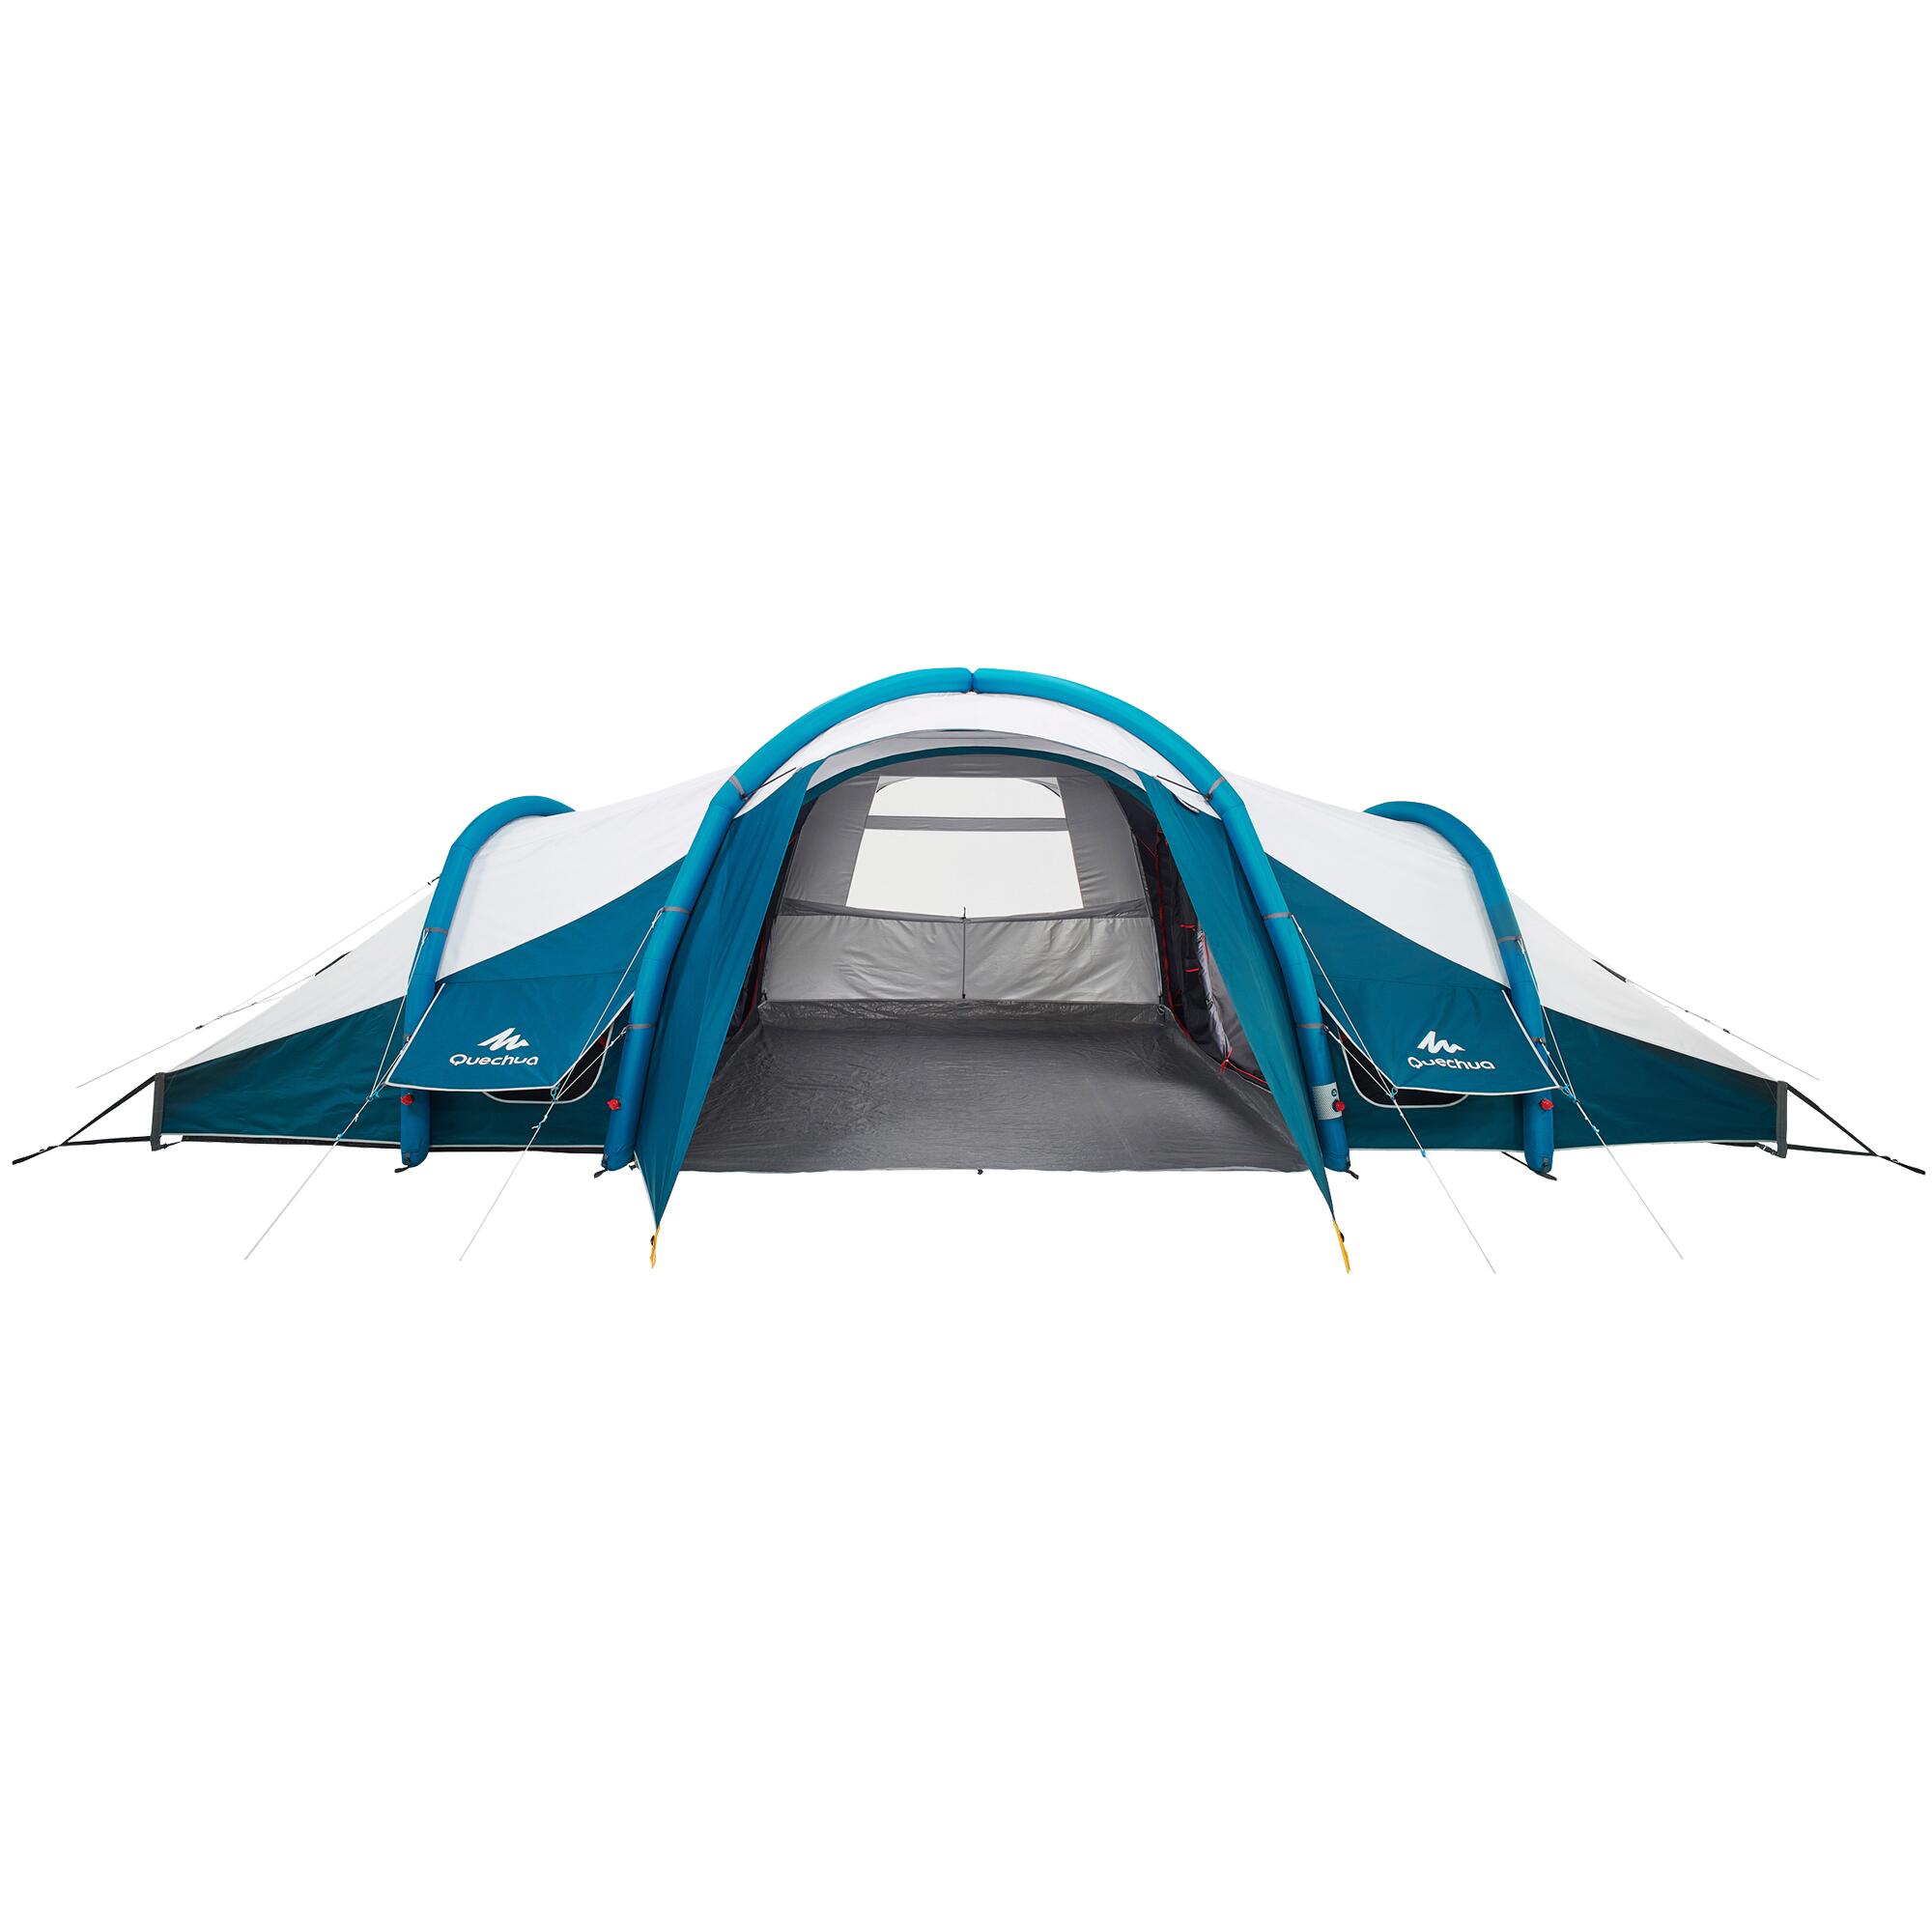 QUECHUA Inflatable camping tent - Air Seconds 8.4 F&B - 8-person - 4 bedrooms